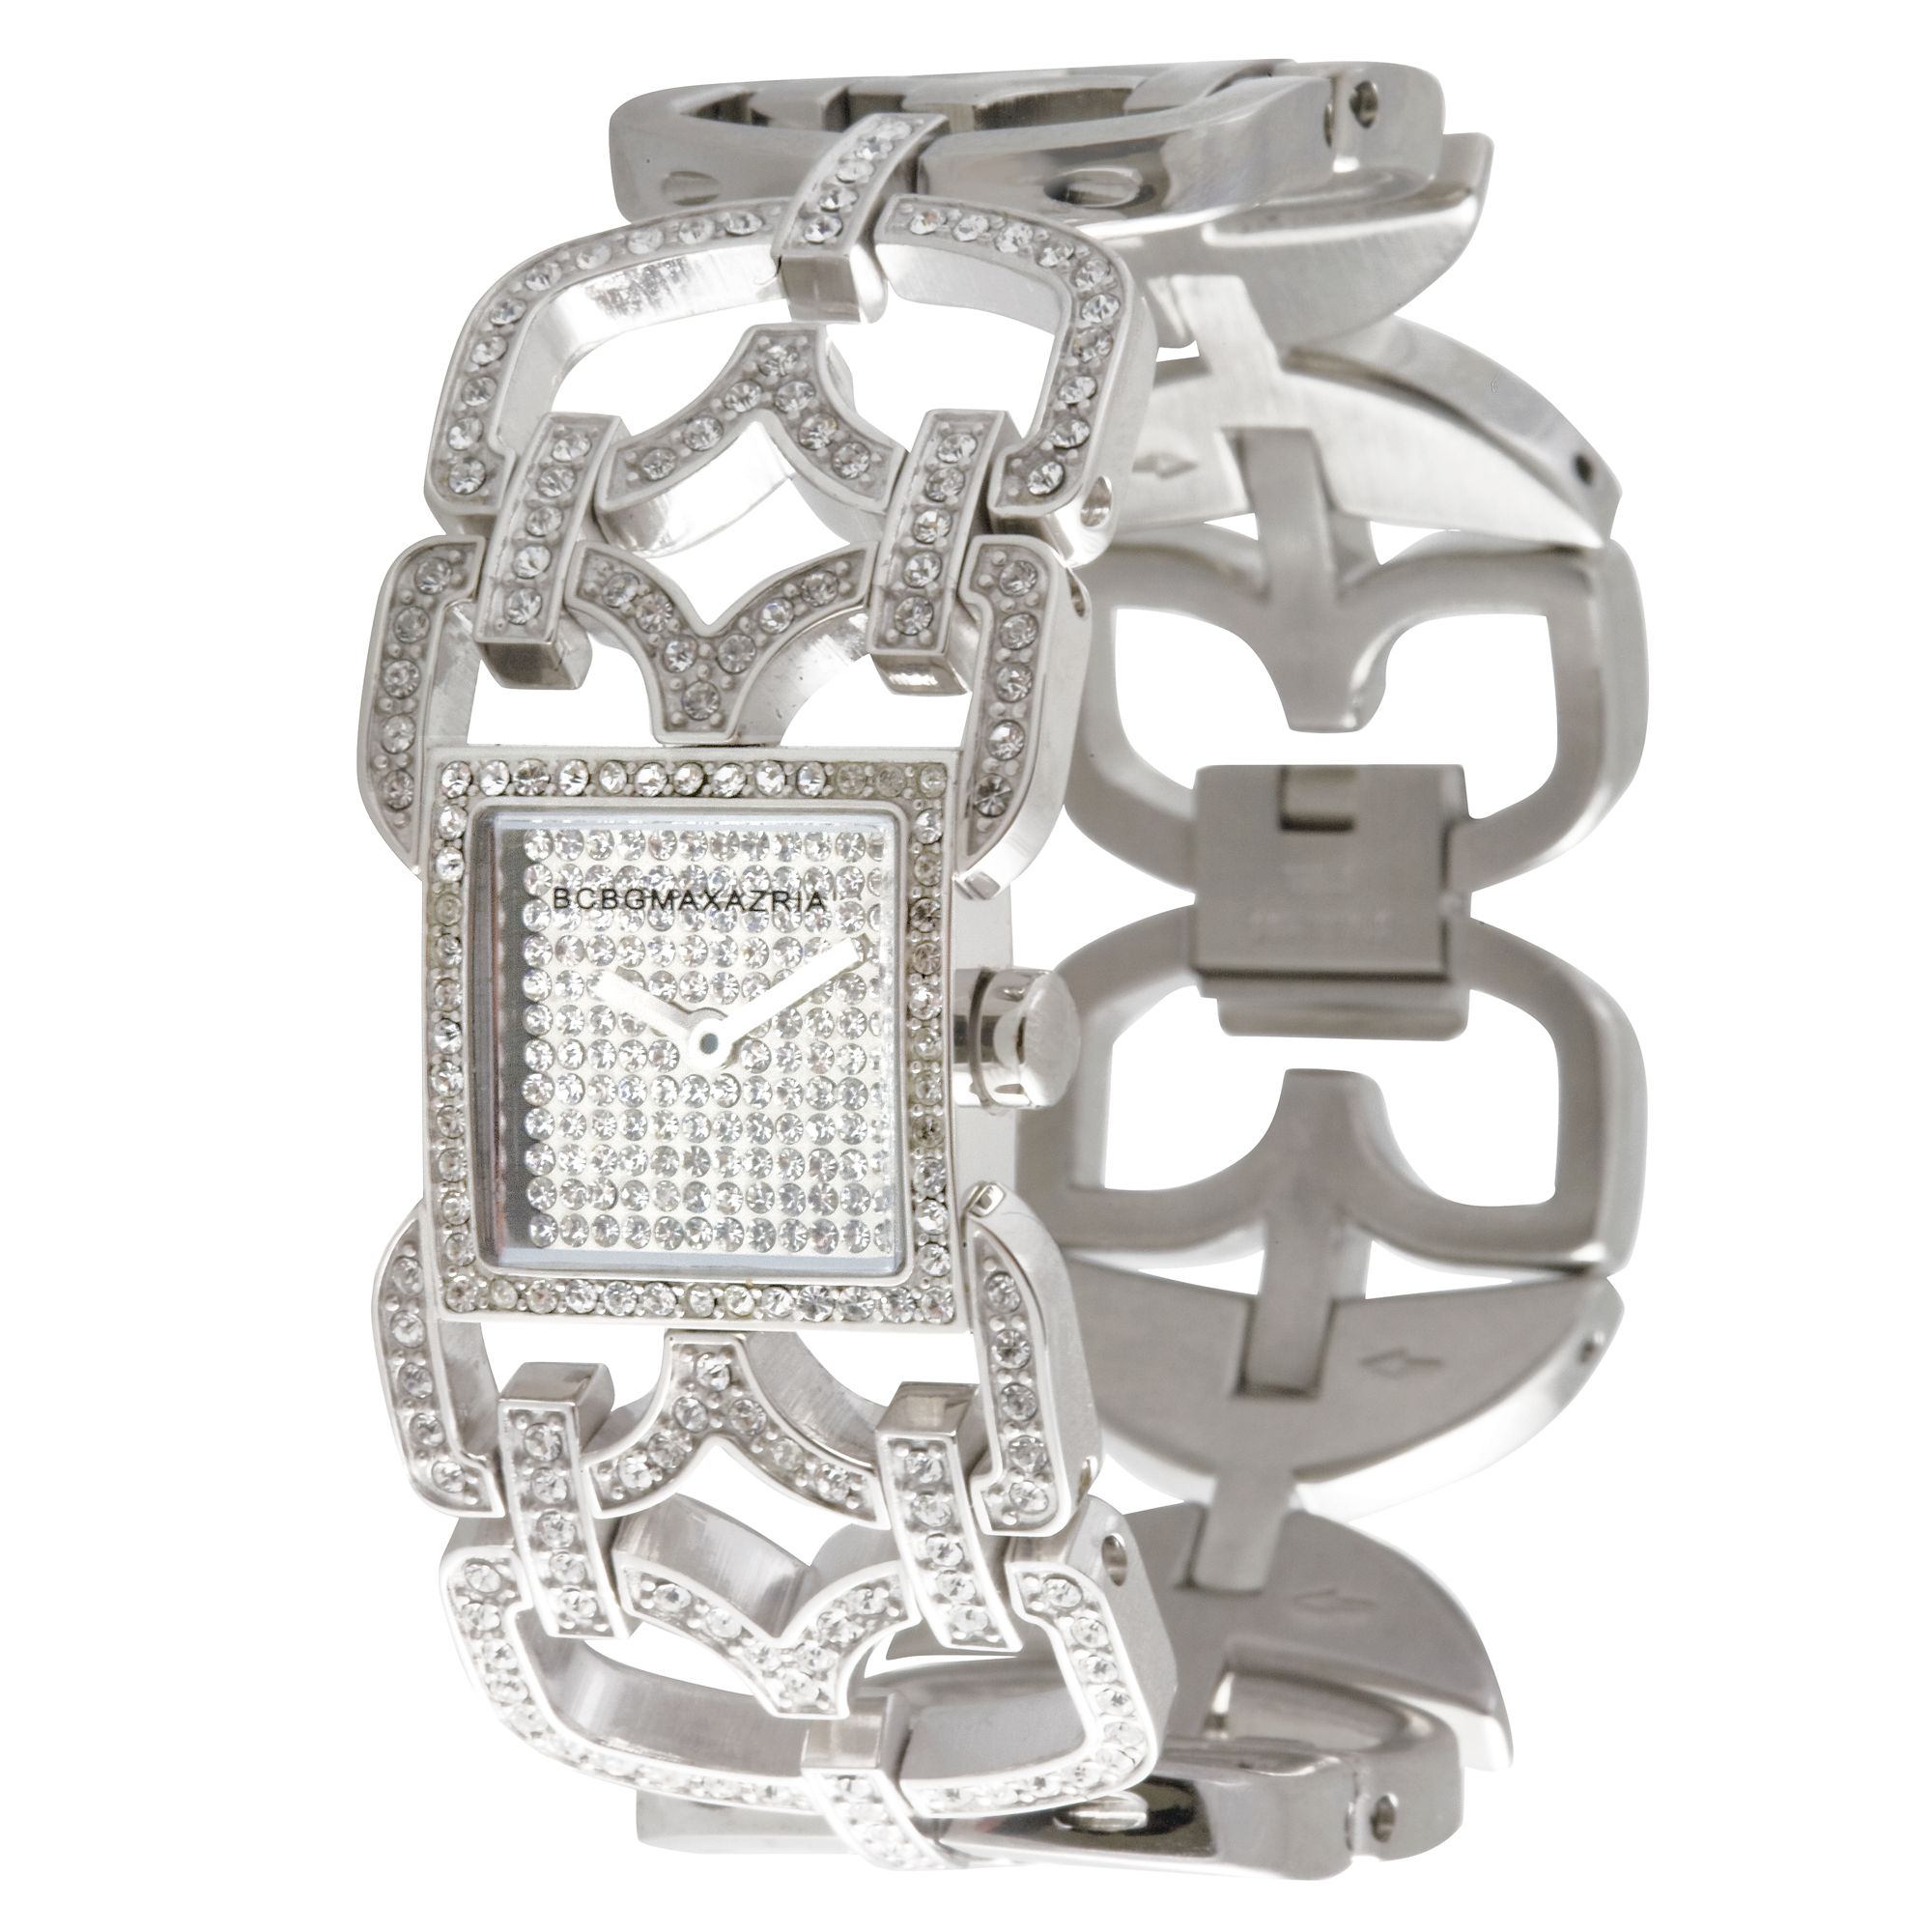 BCBG Max Azria BG8218 Women's Ornate Silver Bracelet Watch at John Lewis